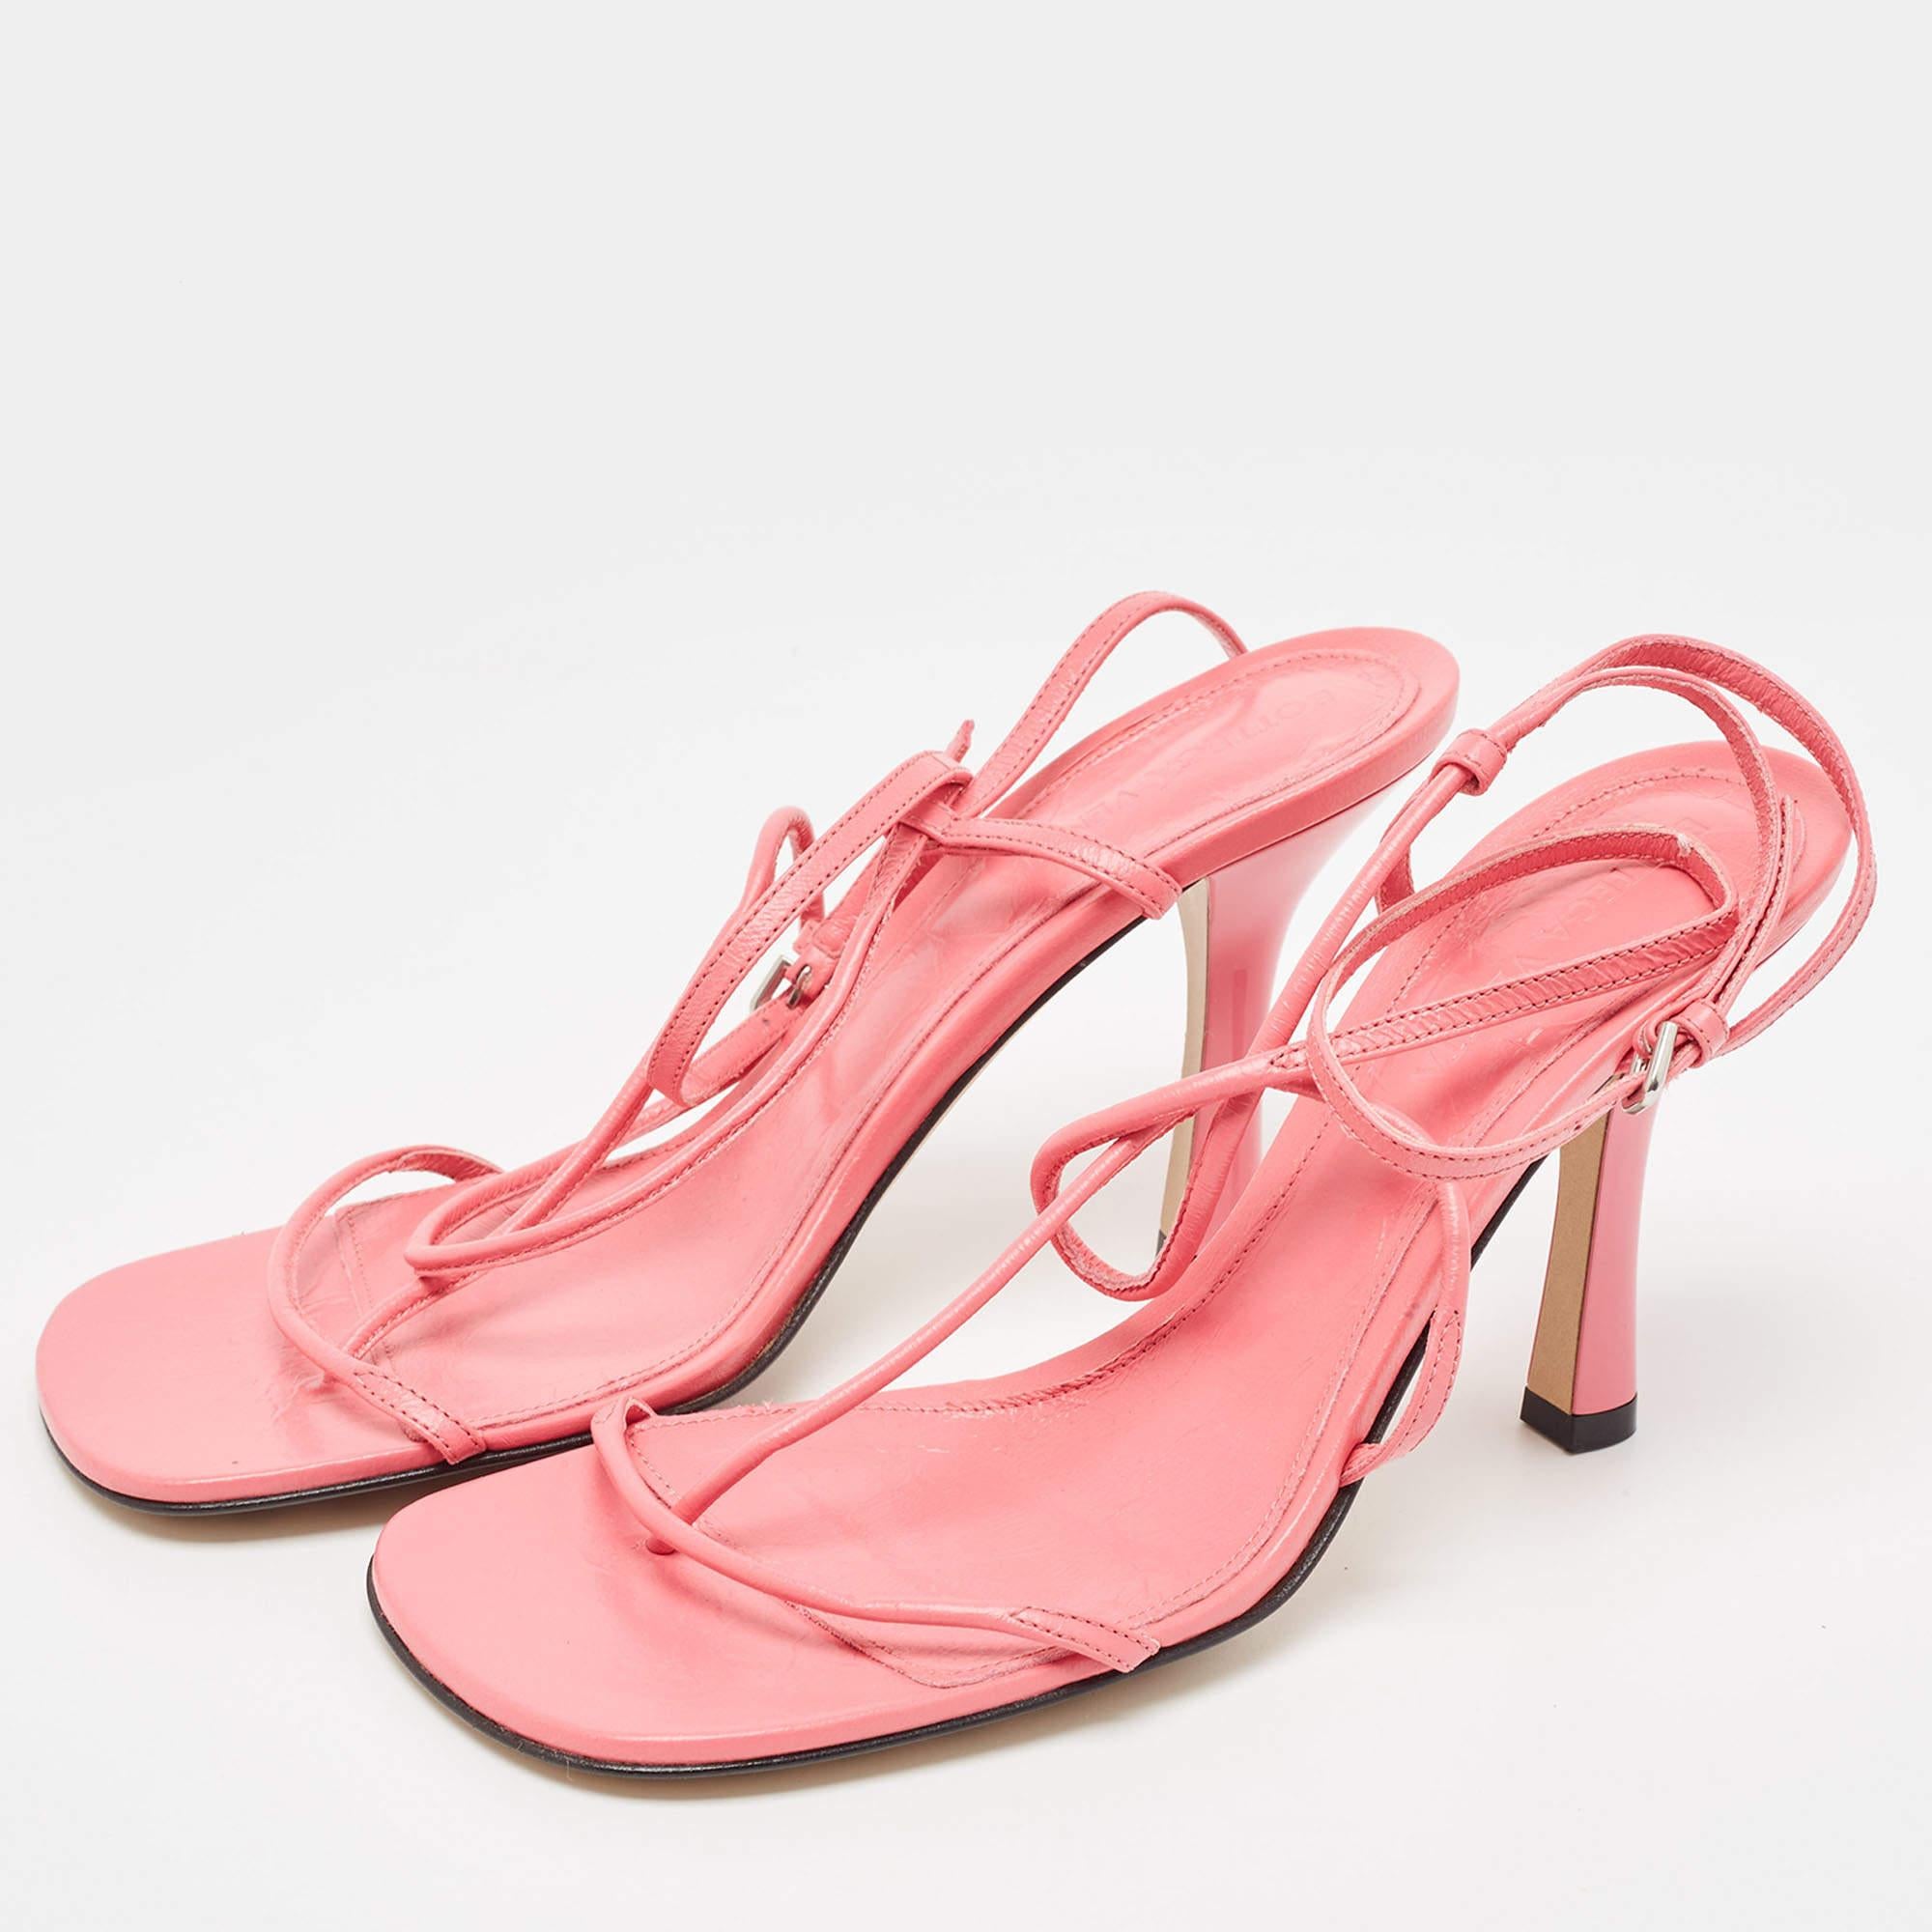 Bottega Veneta Pink Leather Ankle Strap Sandals Size 37 For Sale 1